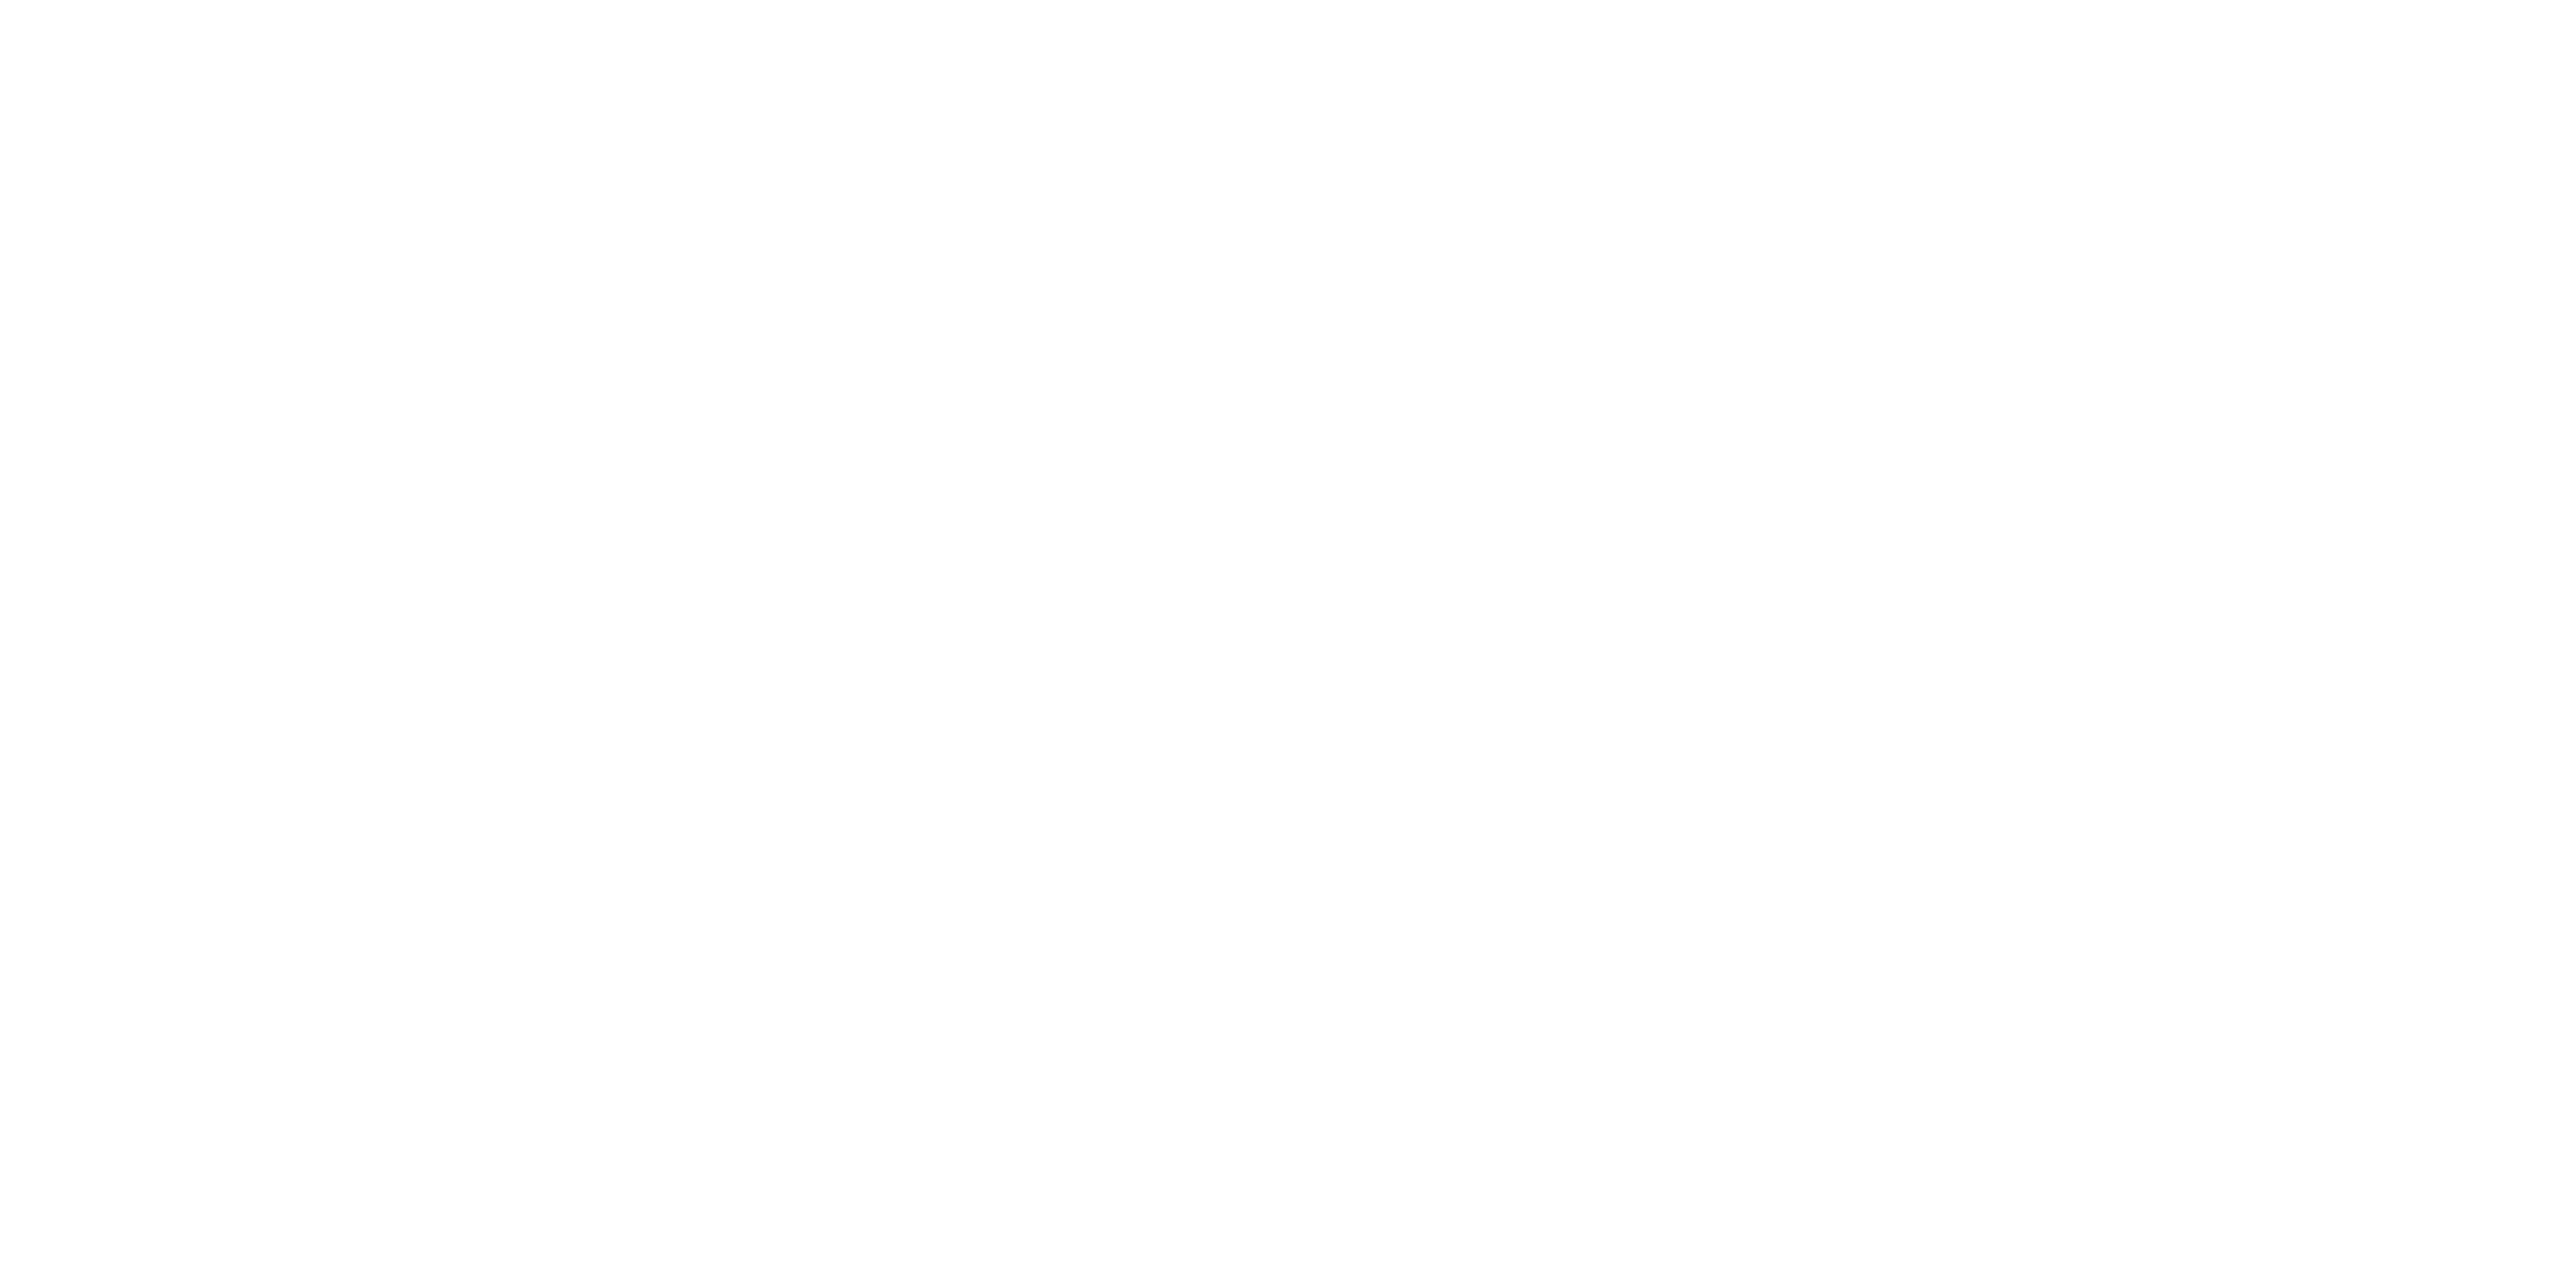 Elysium Medical Center